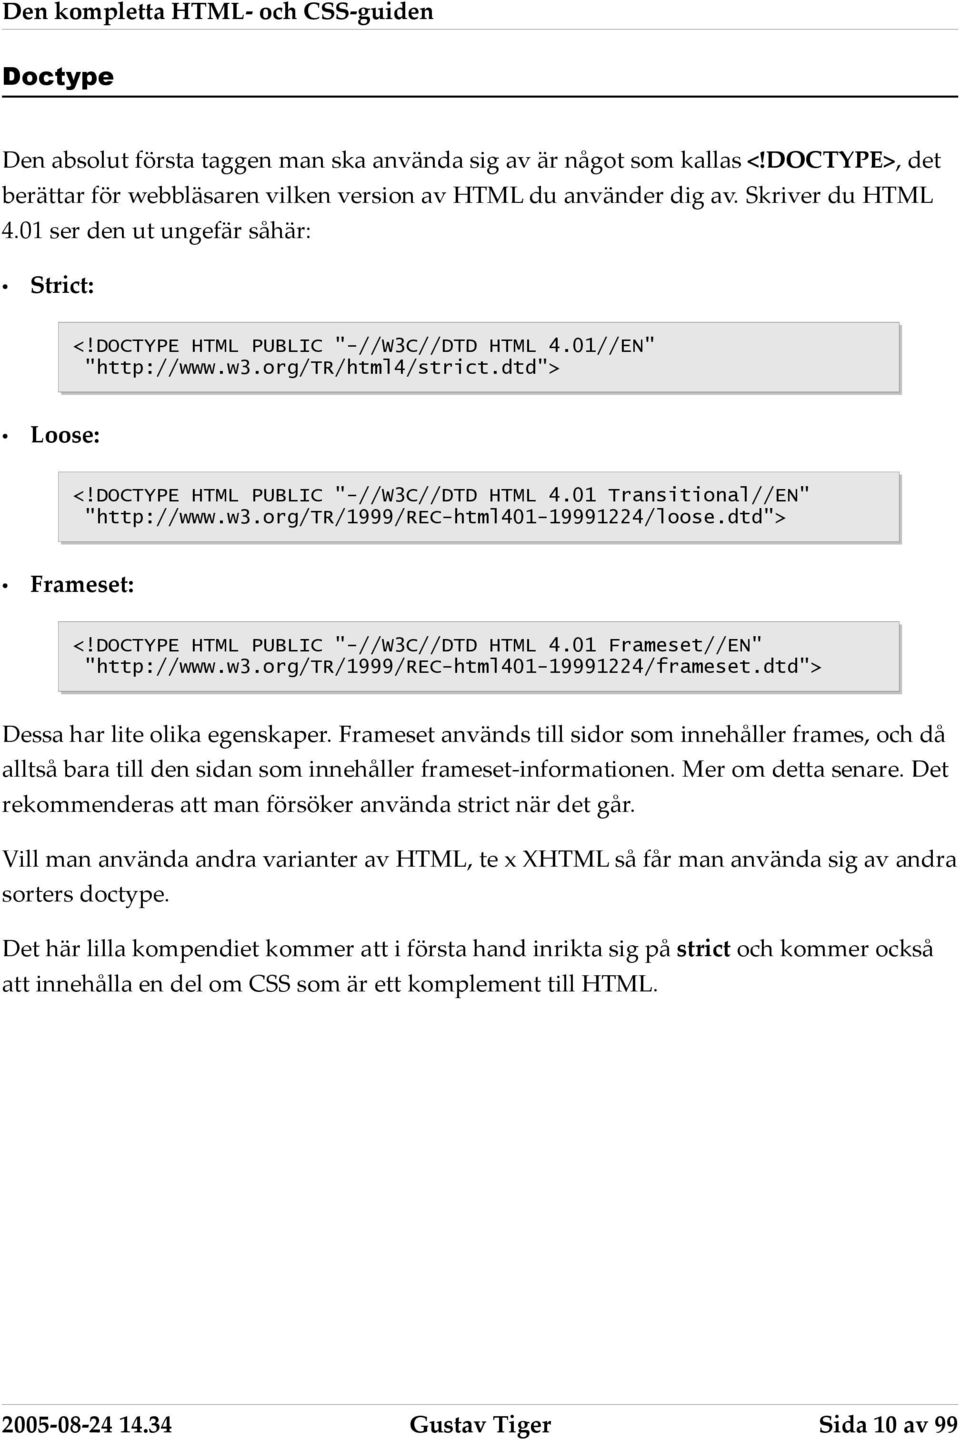 w3.org/tr/1999/rec-html401-19991224/loose.dtd"> Frameset: <!DOCTYPE HTML PUBLIC "-//W3C//DTD HTML 4.01 Frameset//EN" "http://www.w3.org/tr/1999/rec-html401-19991224/frameset.